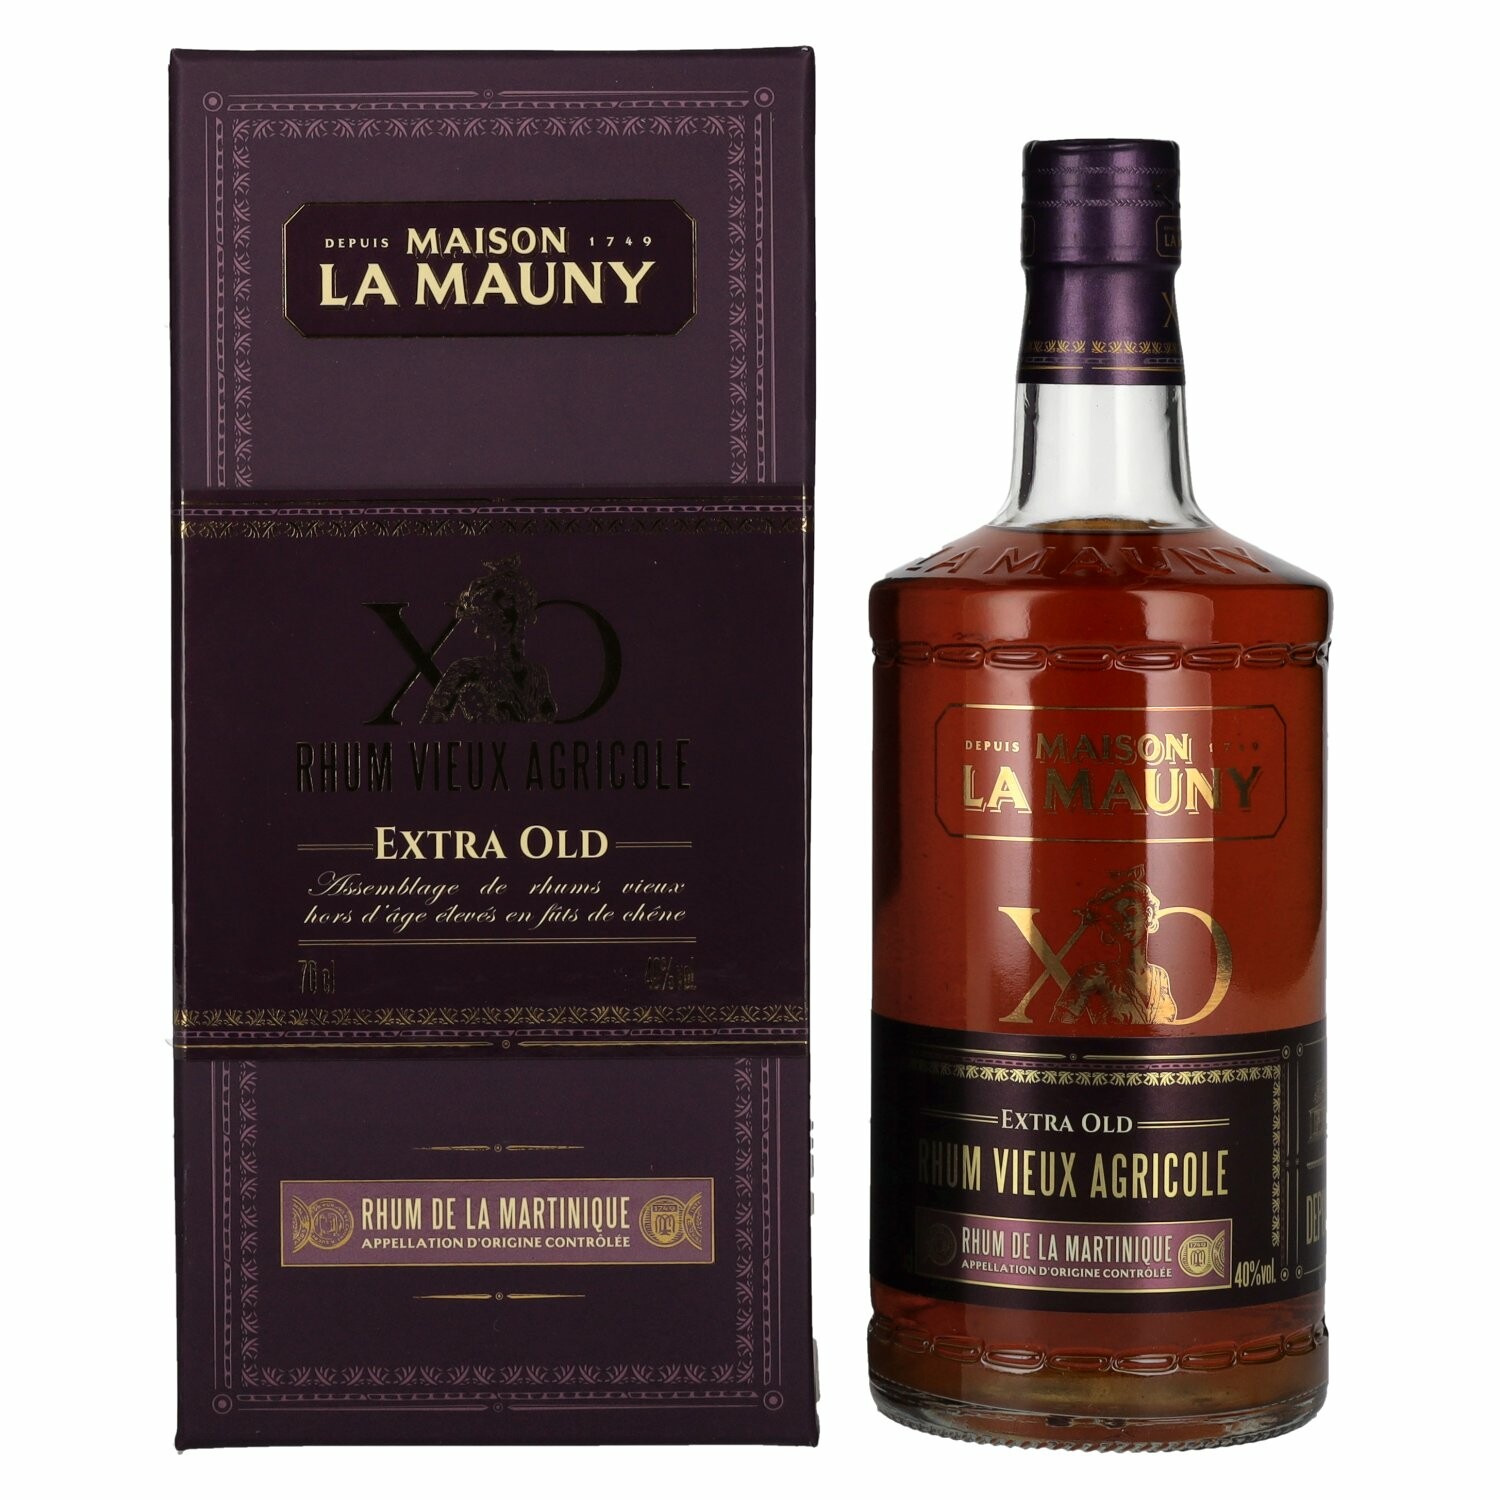 La Mauny XO Rhum Vieux Agricole 40% Vol. 0,7l in Giftbox